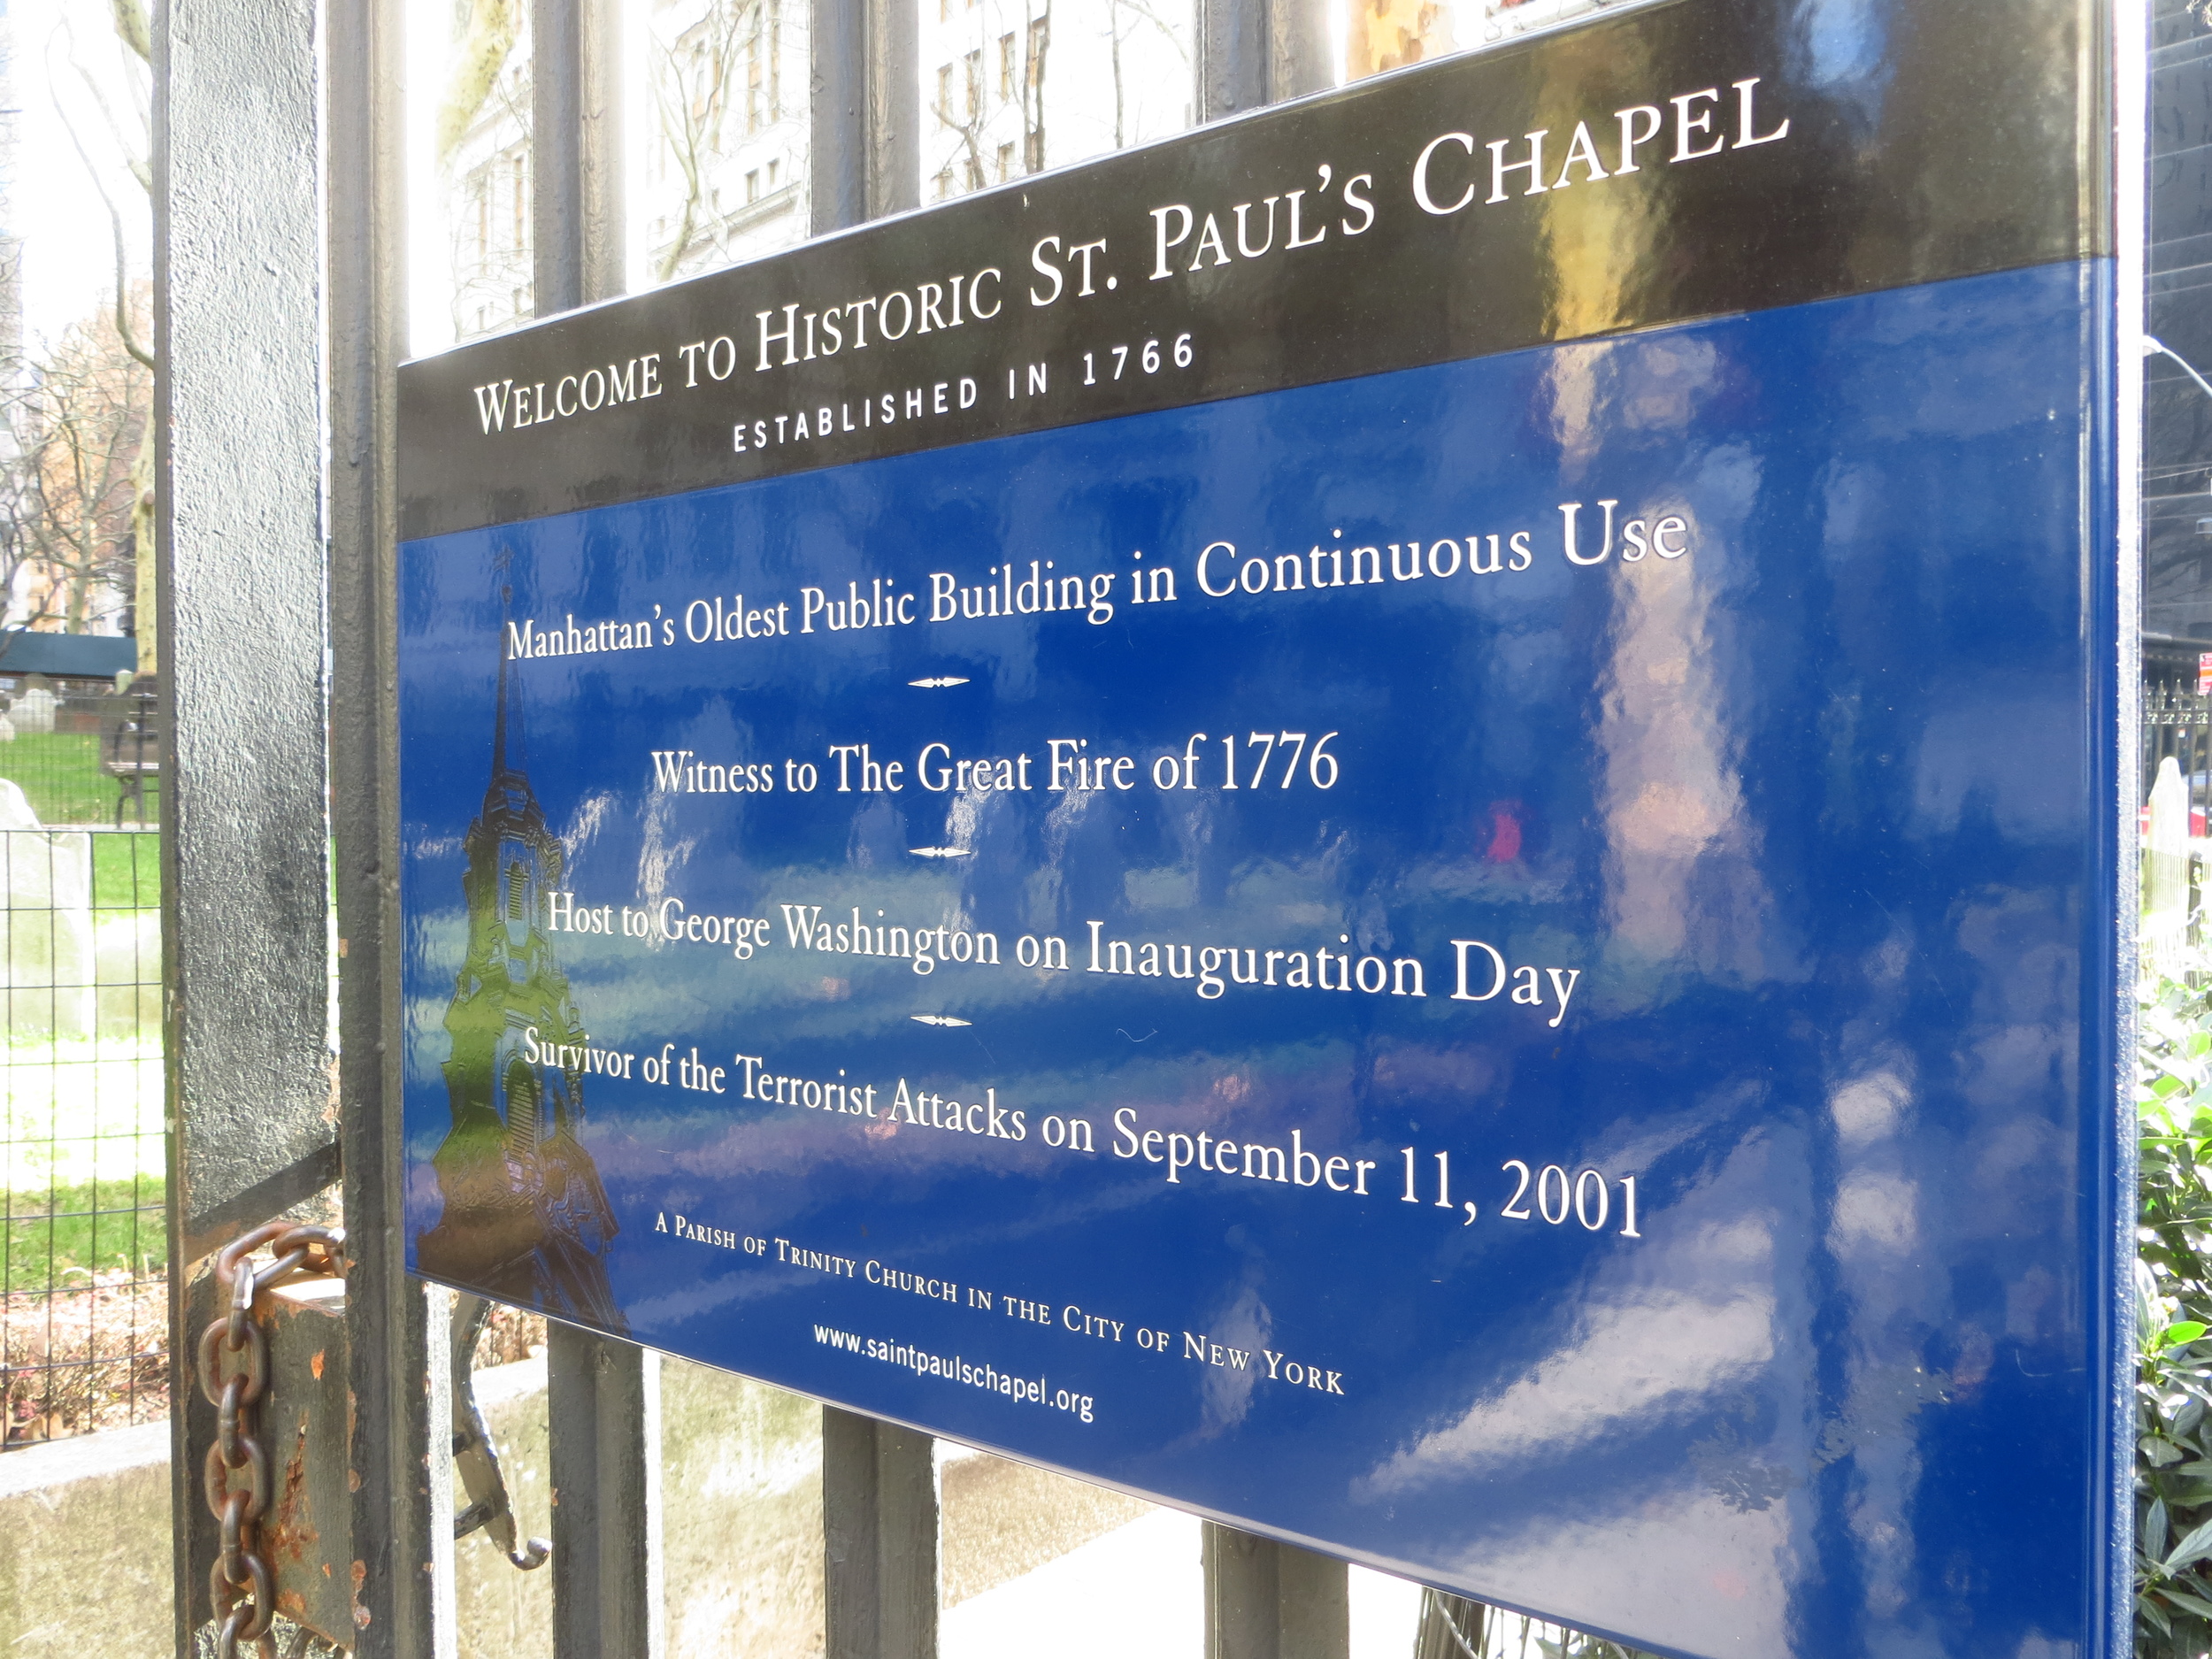 St. Paul's Chapel history